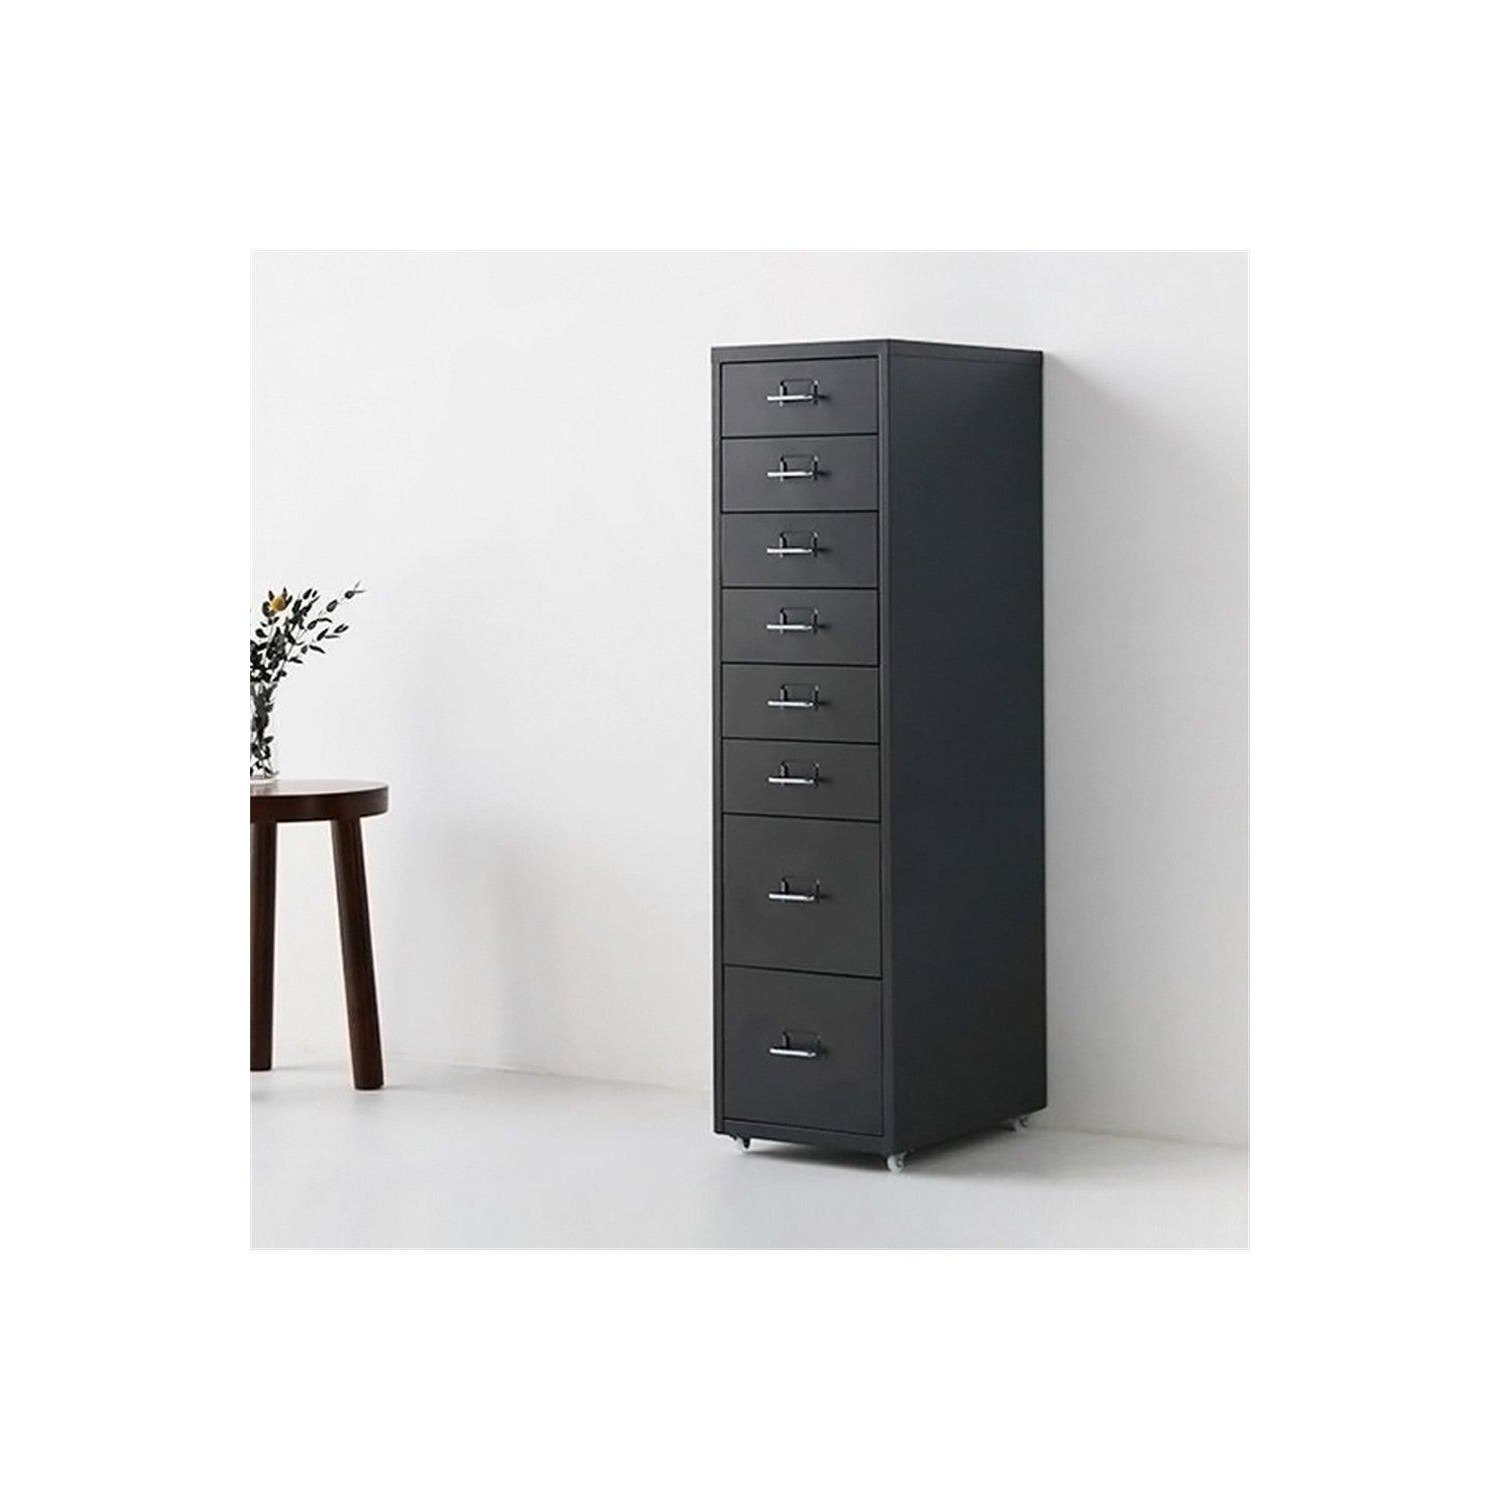 8 Drawers Vertical File Cabinet with Wheels Living Room Storage Cabinet Bedroom Black Bedside Table - image 1